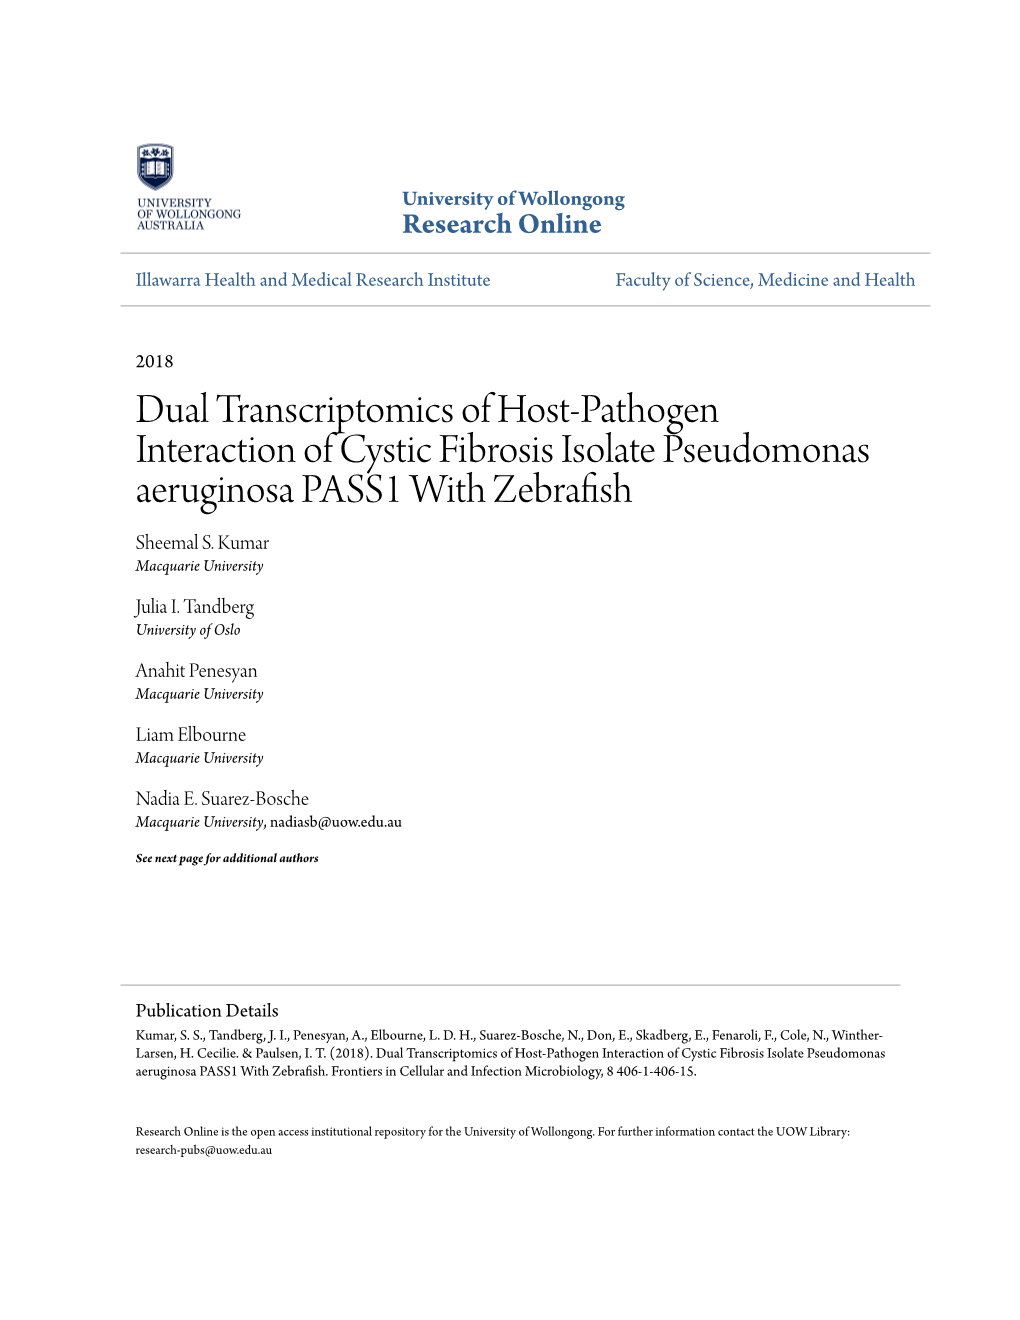 Dual Transcriptomics of Host-Pathogen Interaction of Cystic Fibrosis Isolate Pseudomonas Aeruginosa PASS1 with Zebrafish Sheemal S